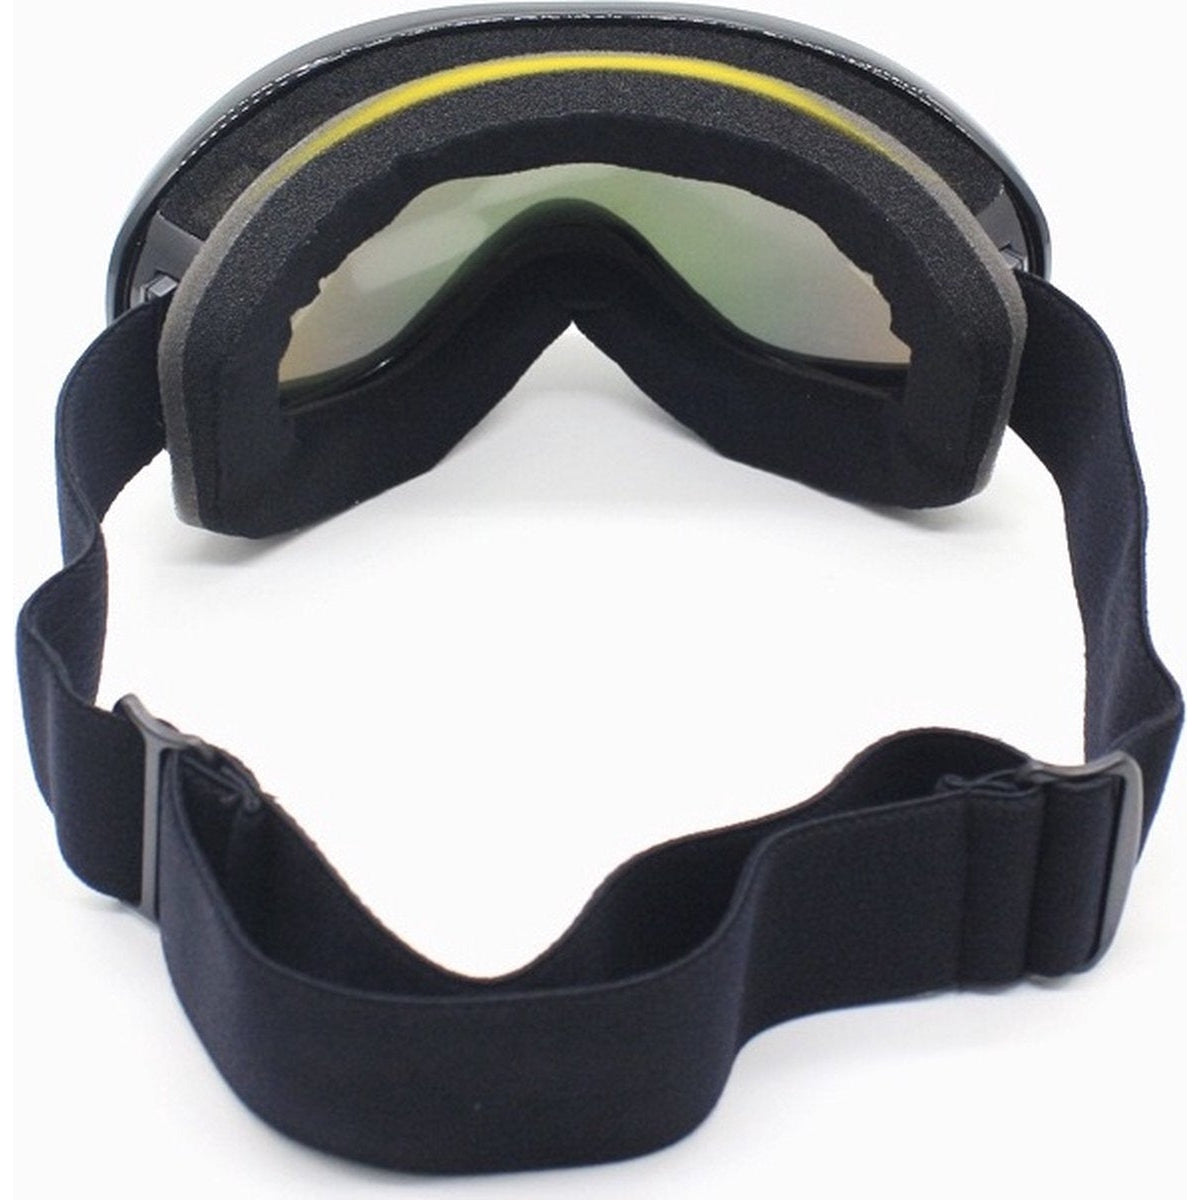 Nixnix - Skibril Zwart - Snowboardbril - UV Beschermend - Verstelbare Ski/Snowboard bril - Unisex - Multi glas